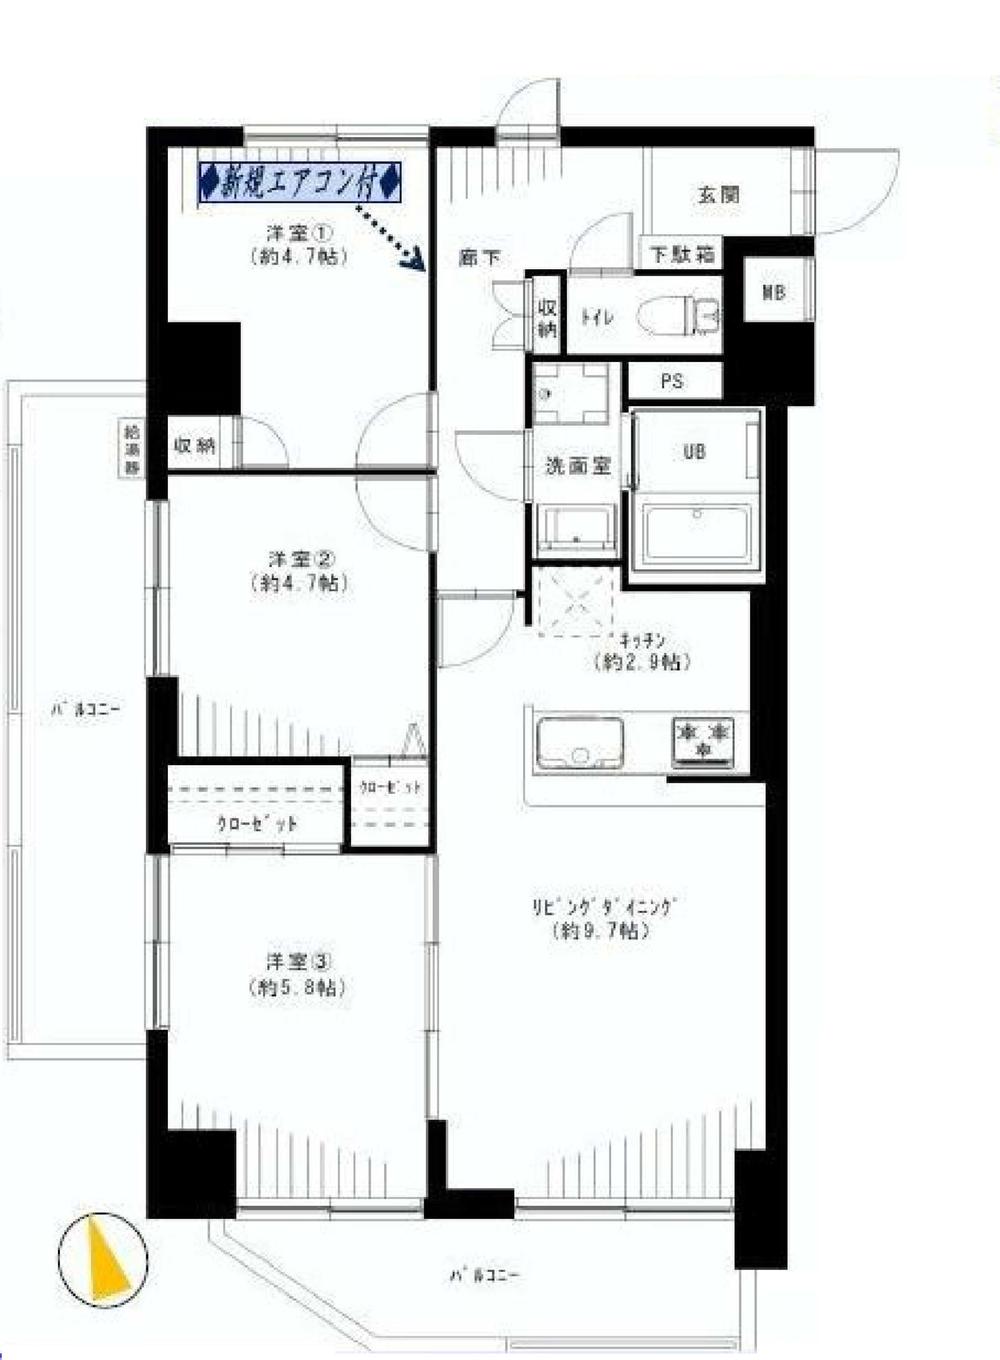 Floor plan. 3LDK, Price 31,800,000 yen, Footprint 65 sq m